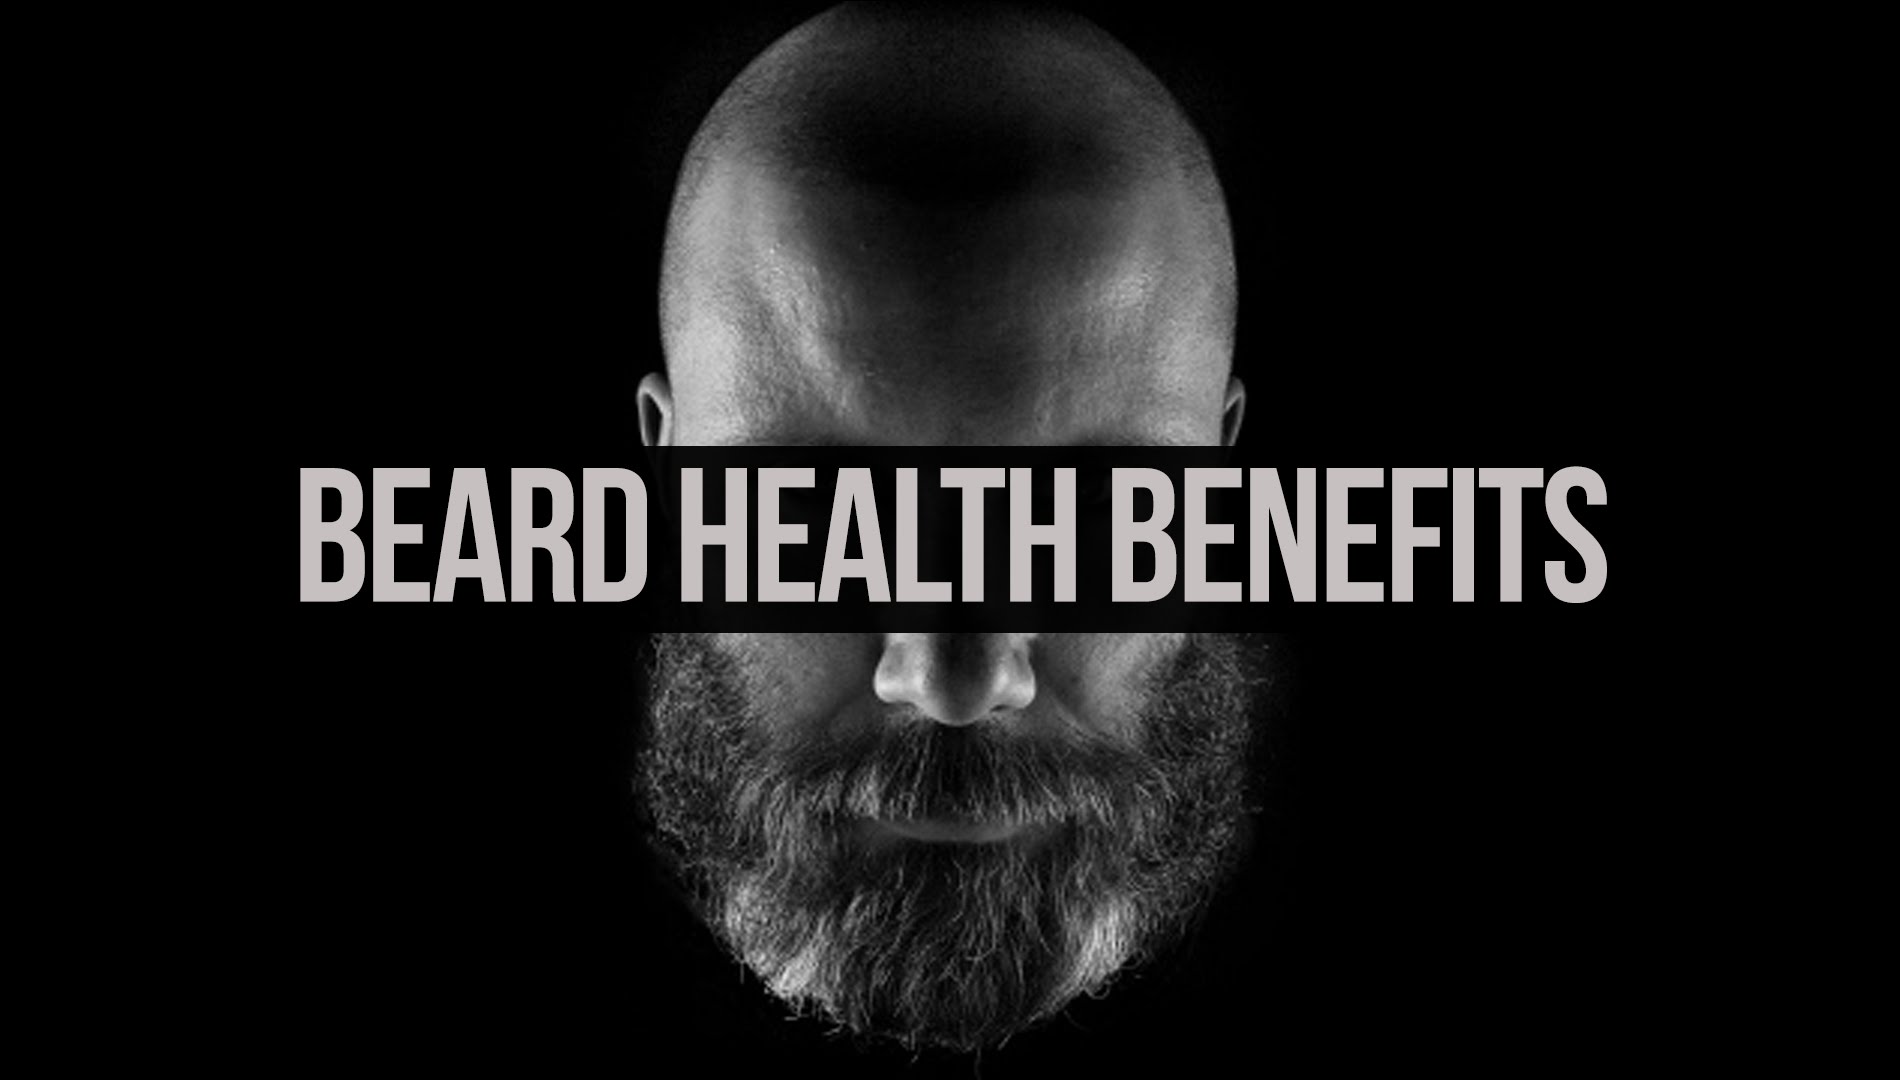 Beard Health Benefits - Must See!